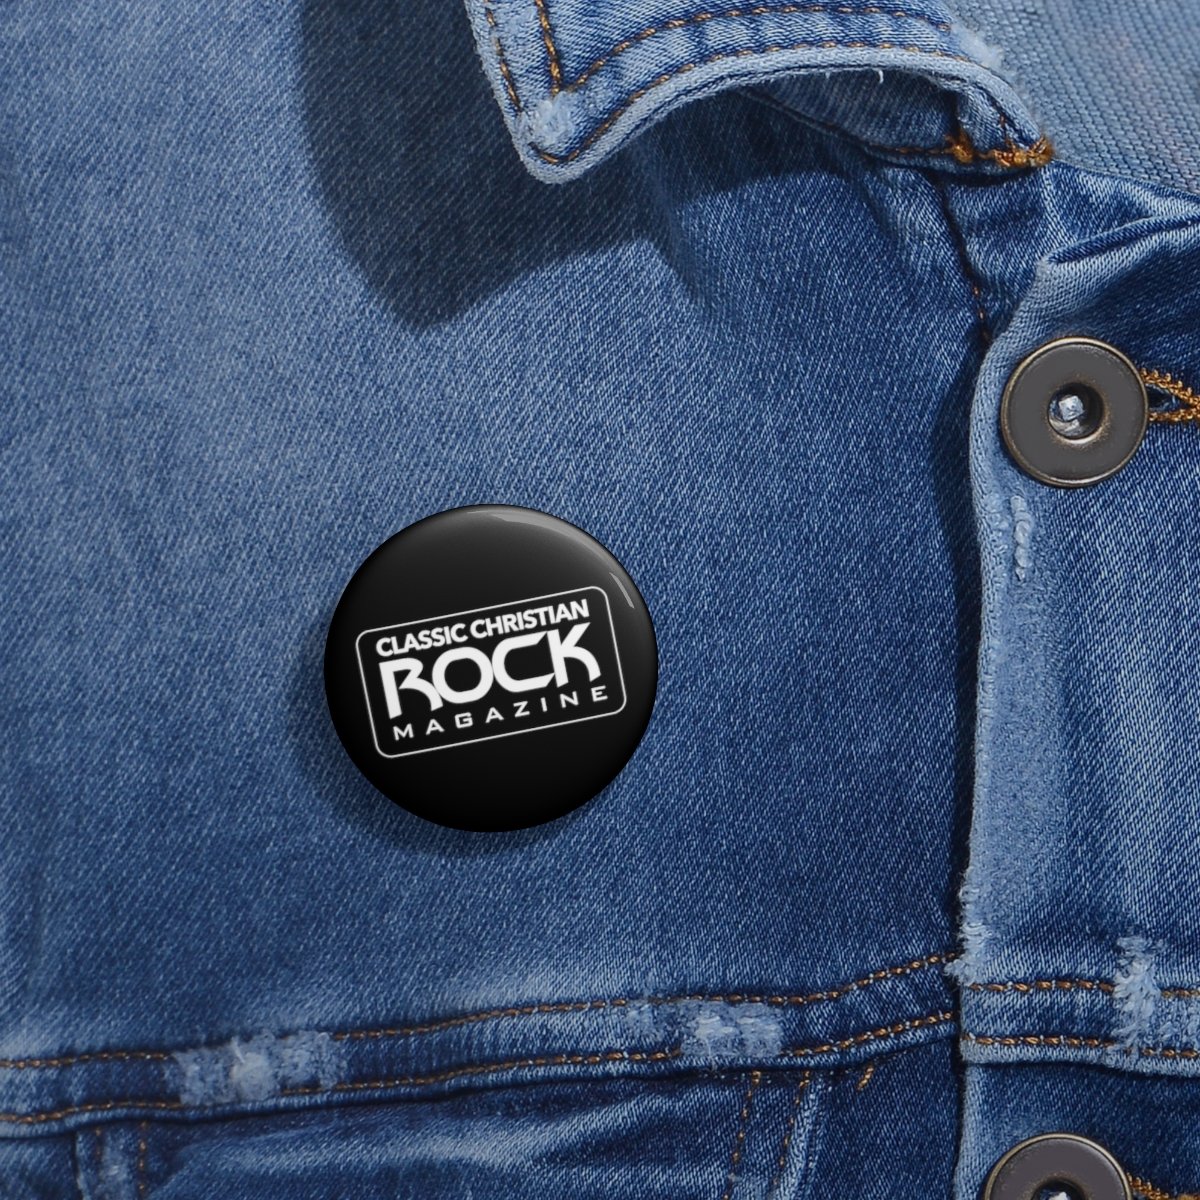 Classic Christian Rock Magazine Pin Buttons